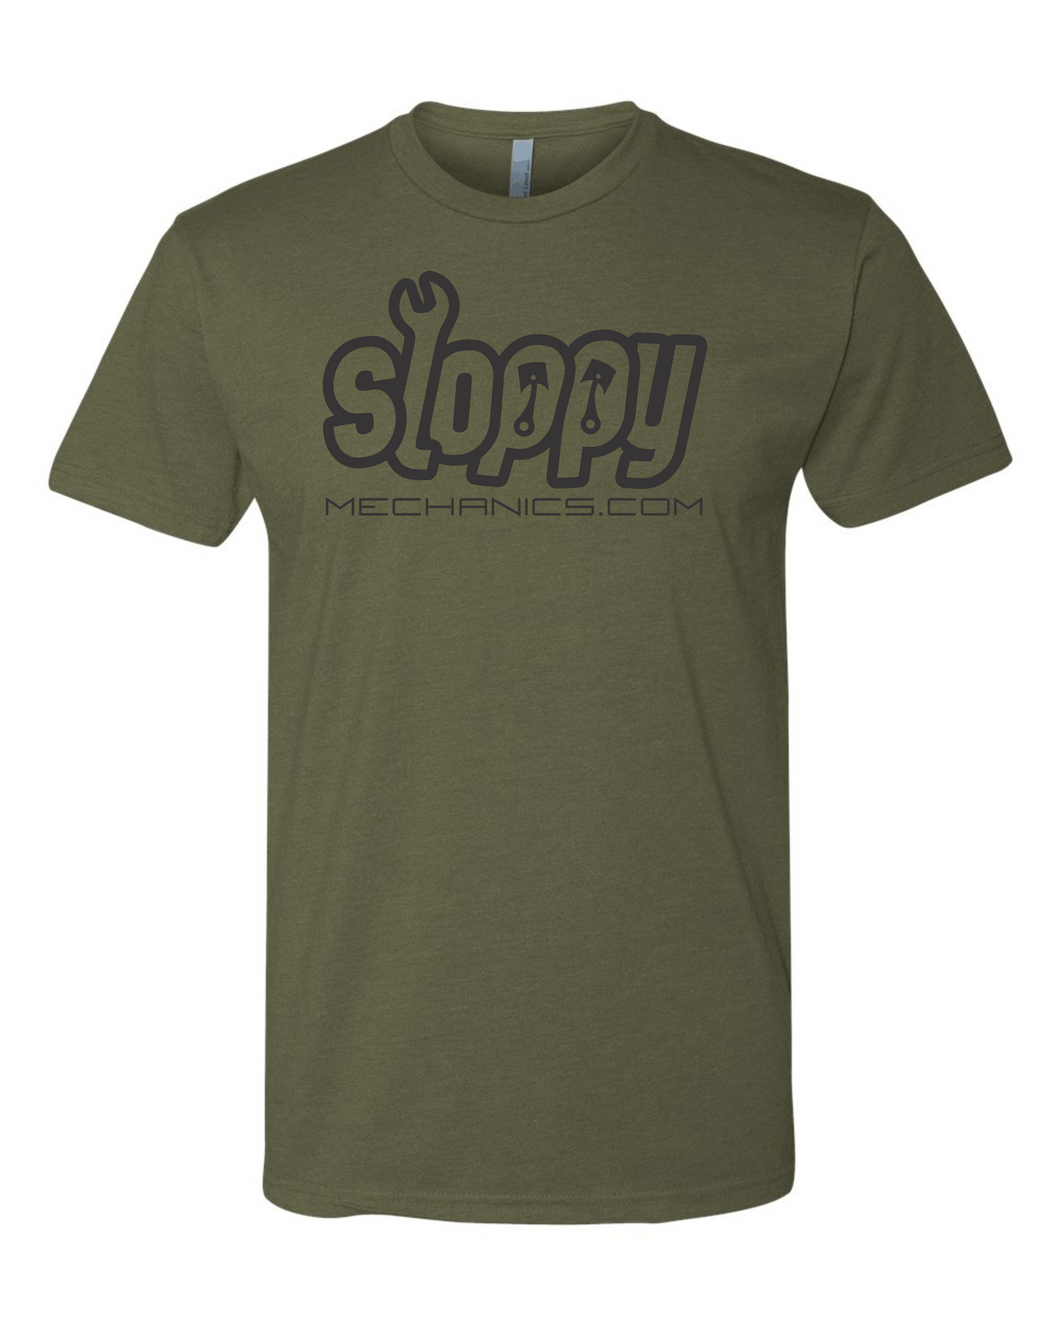 Army Green Classic Sloppymechanics.com T-Shirt